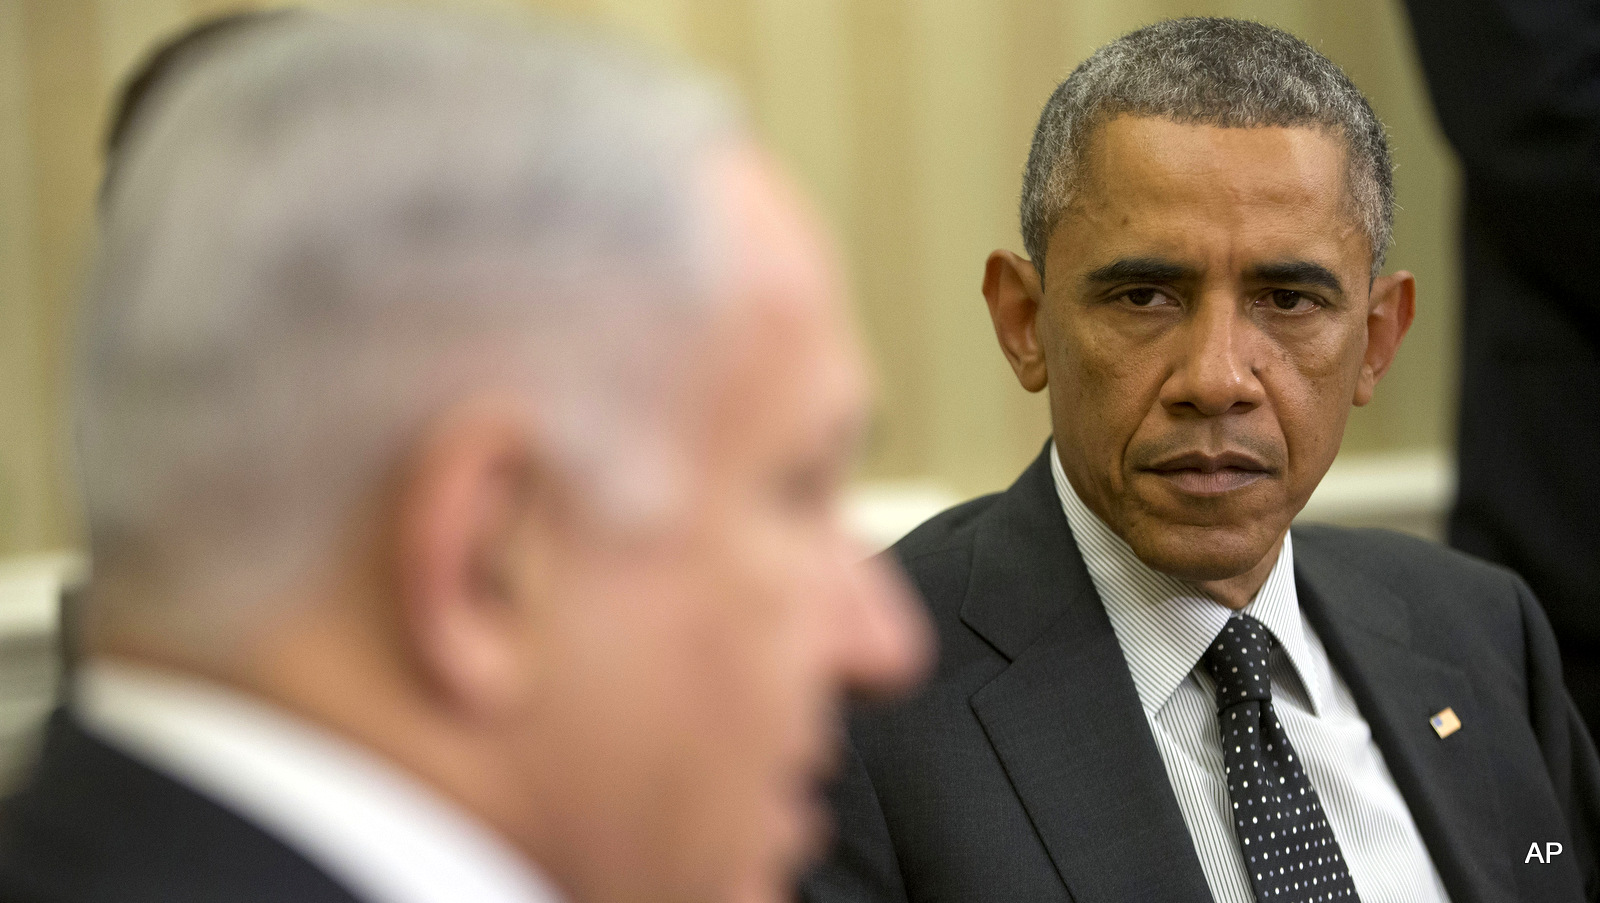 President Barack Obama listens as Israeli Prime Minister Benjamin Netanyahu speaks during their meeting in the Oval Office of the White House in Washington, Wednesday, Oct. 1, 2014.